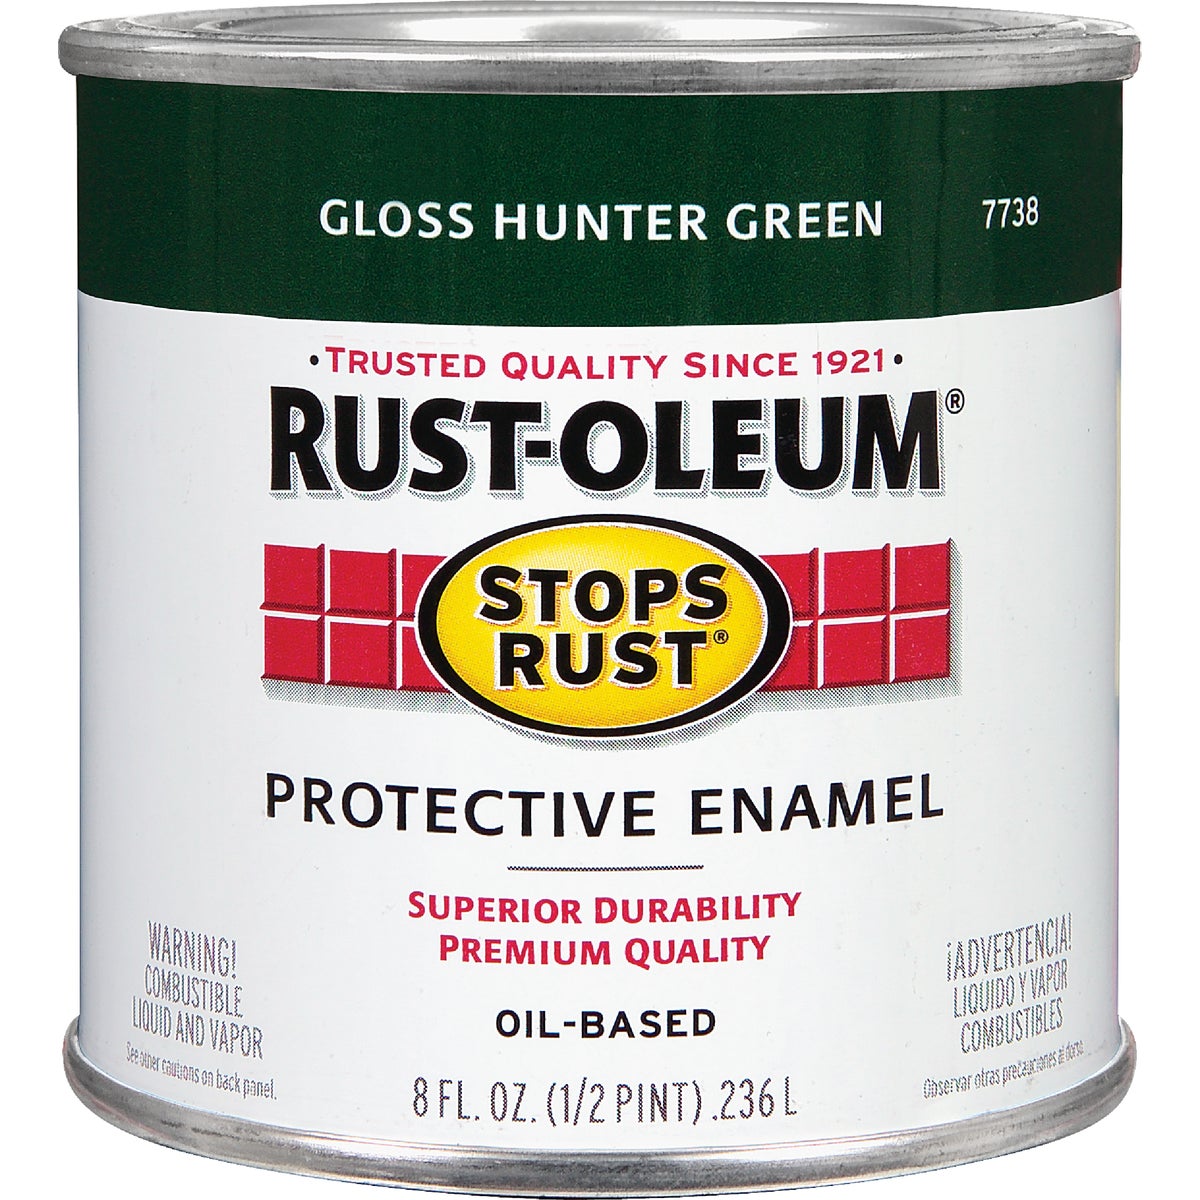 Rust-Oleum Stops Rust Oil Based Gloss Protective Rust Control Enamel, Hunter Green, 1/2 Pt.